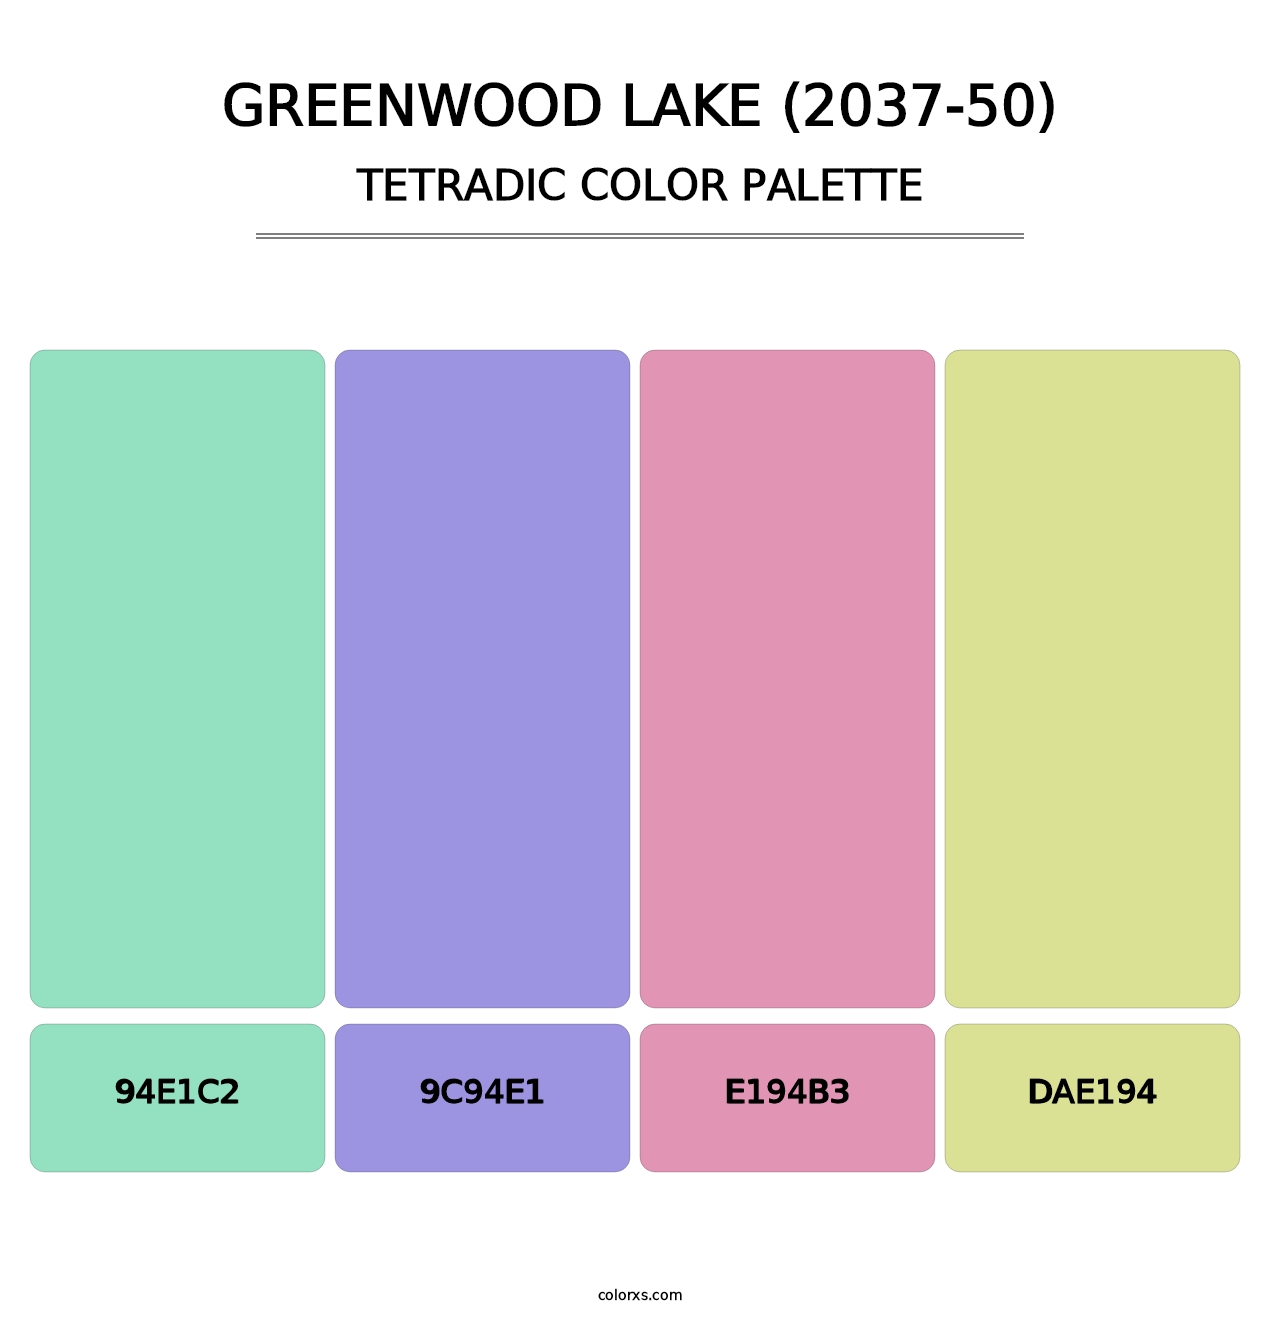 Greenwood Lake (2037-50) - Tetradic Color Palette